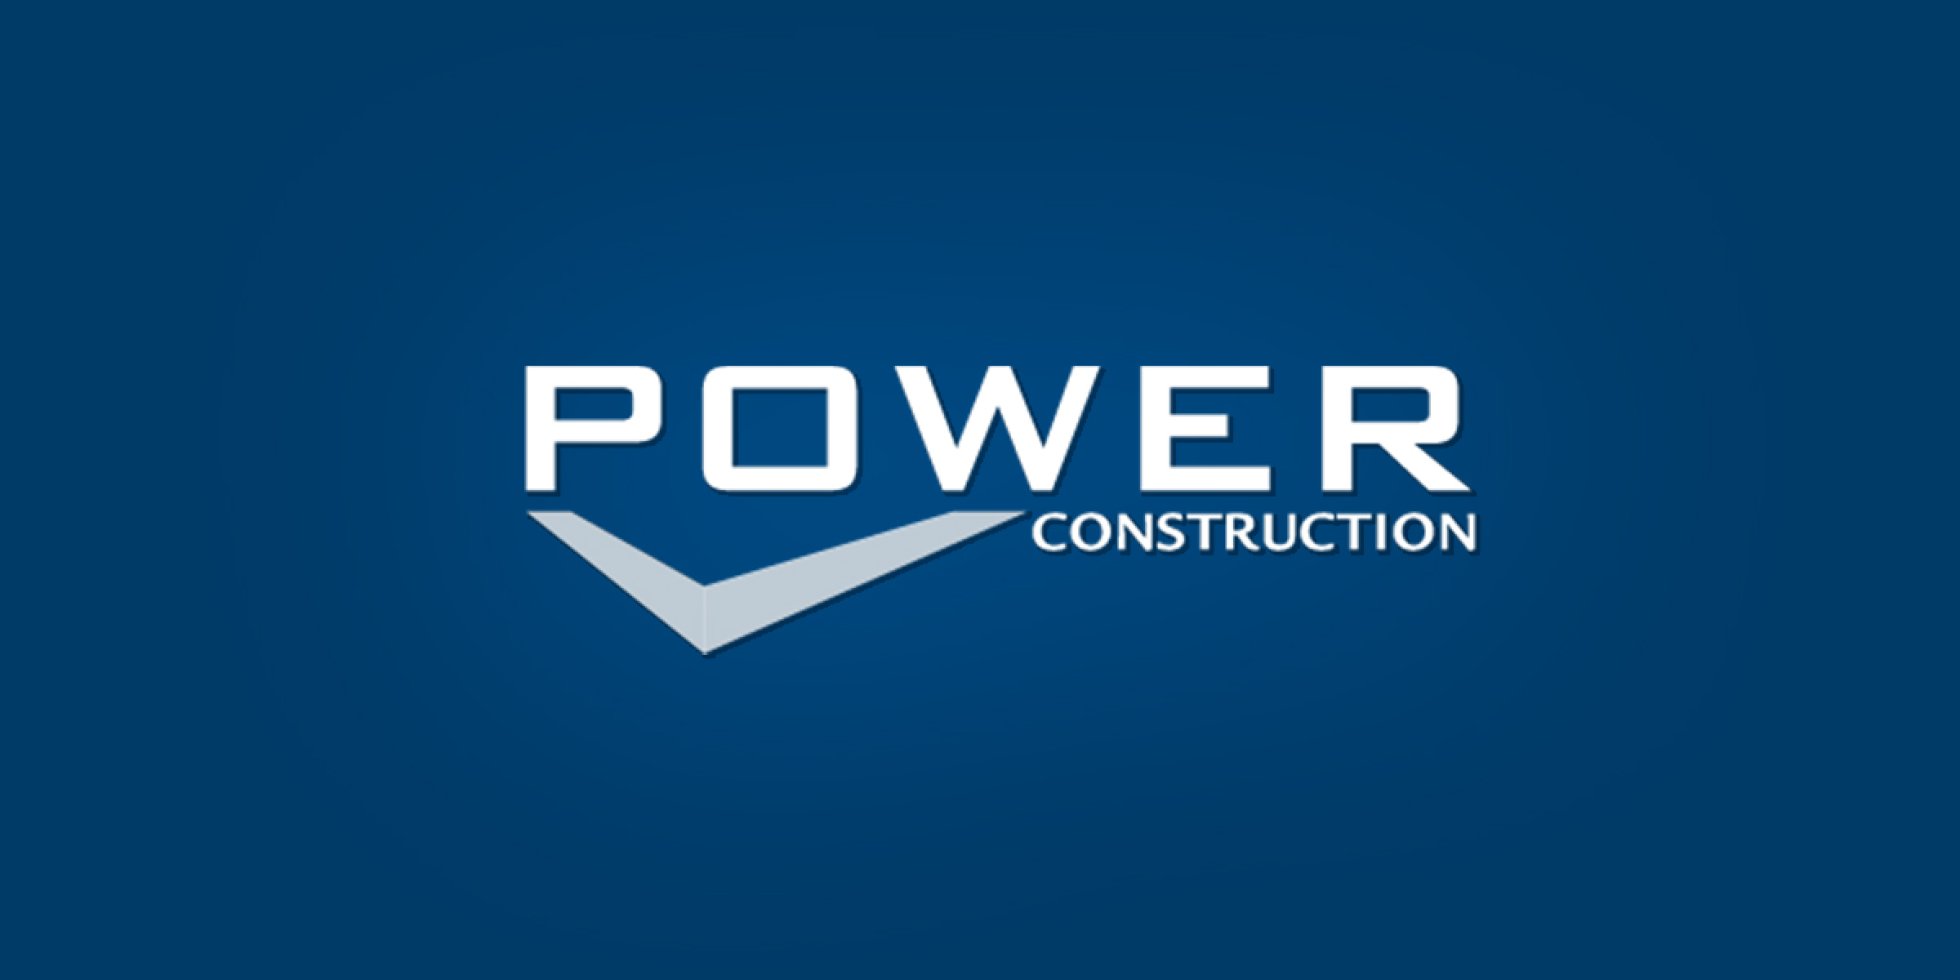 New Client Spotlight: Power Construction